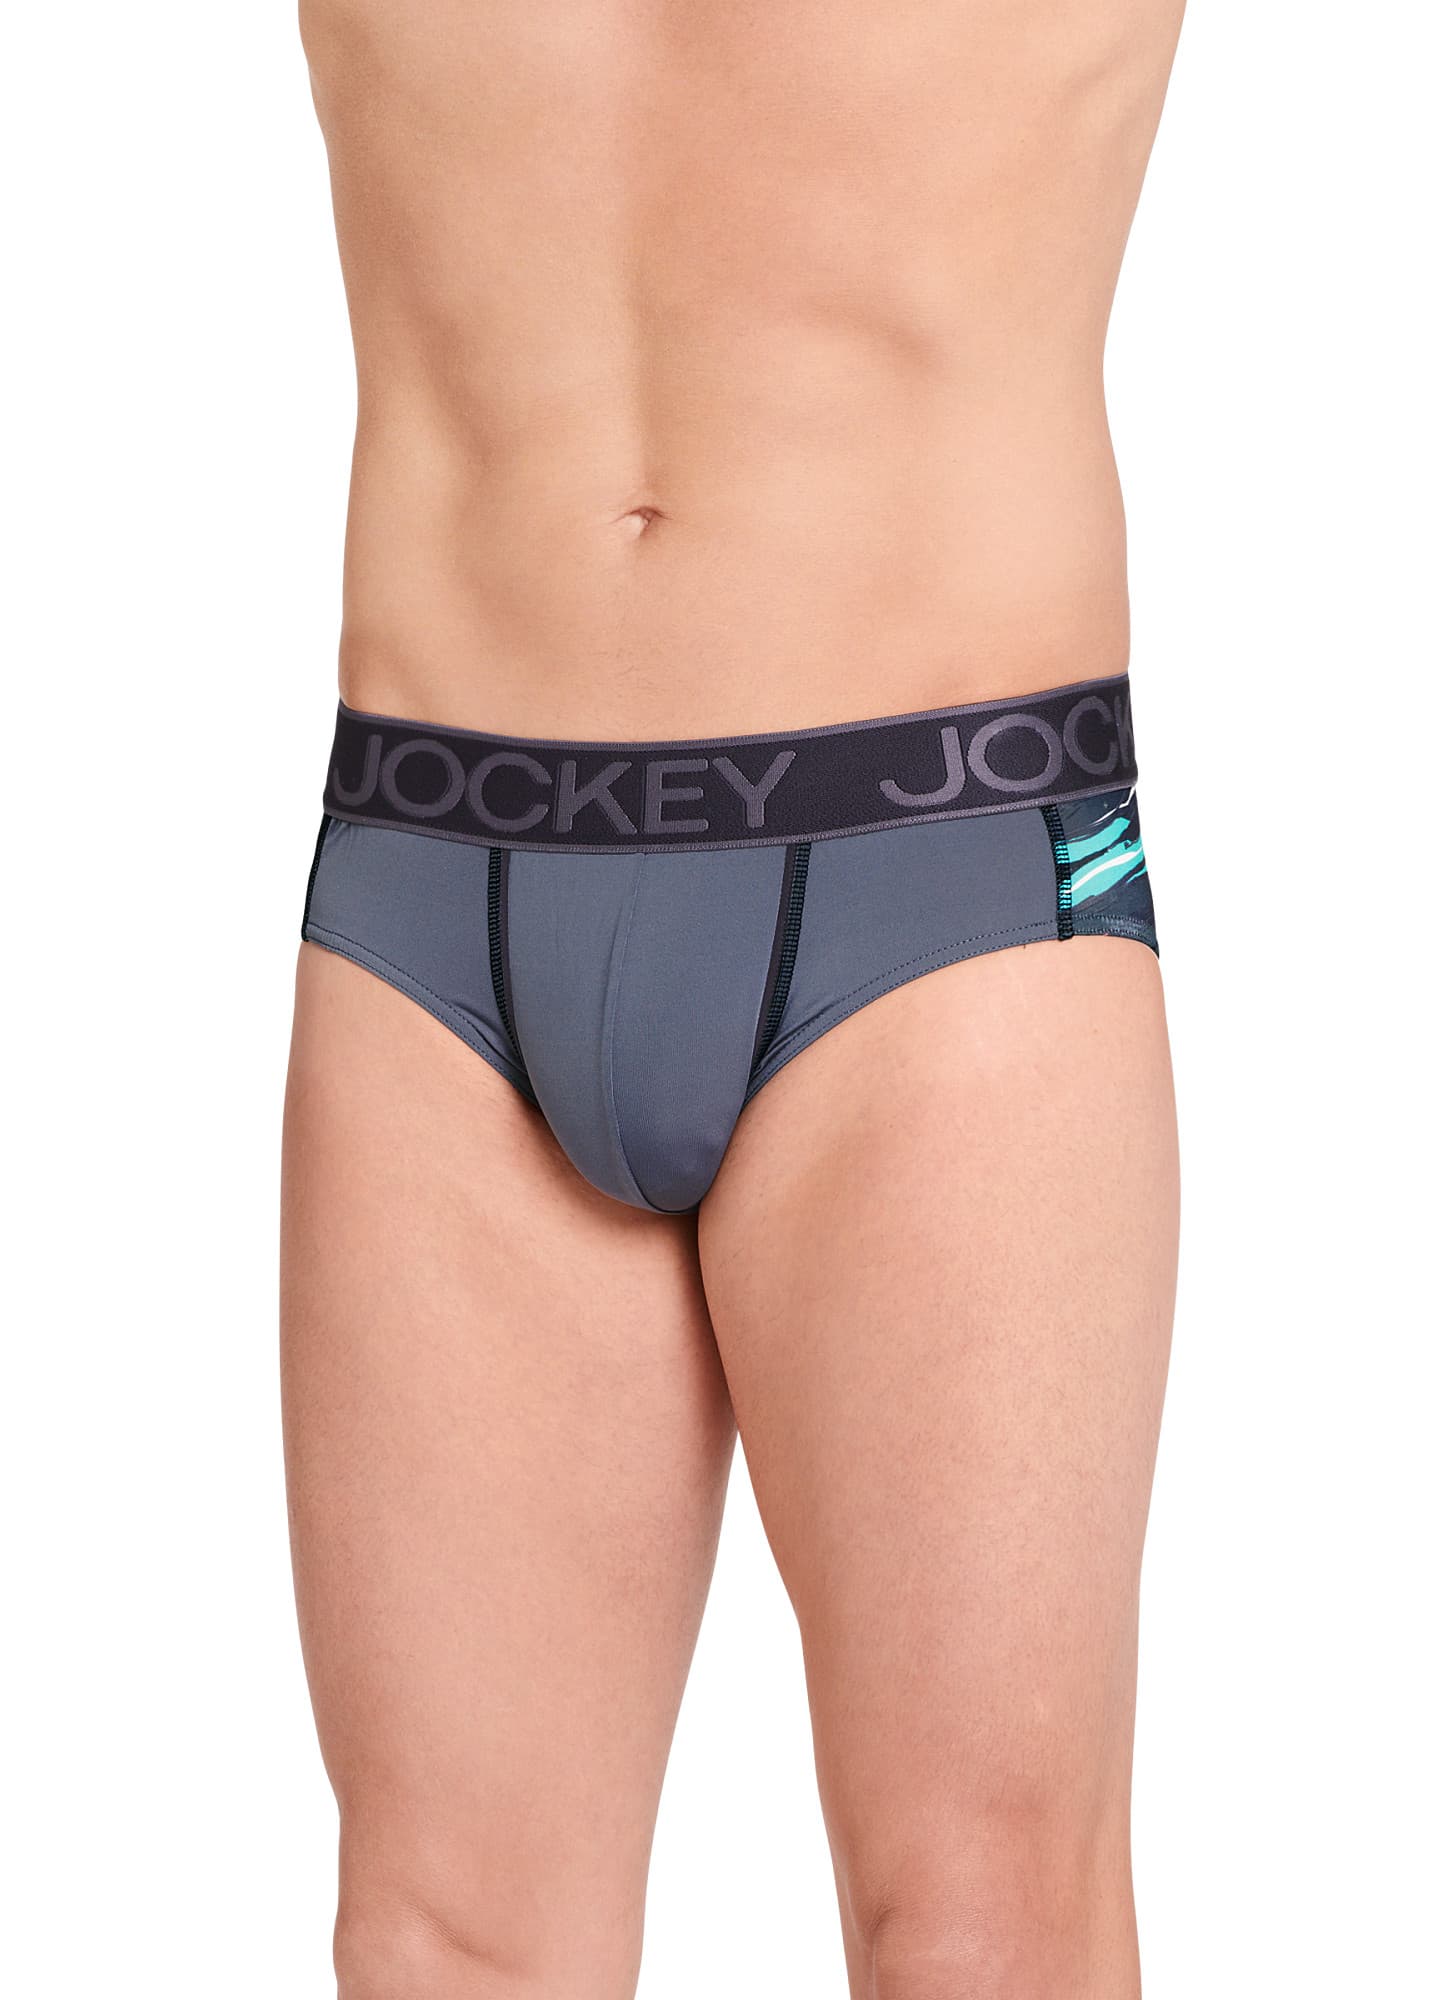 Jockey Men's Underwear Sport Stretch Tech Performance 8 Boxer Brief 